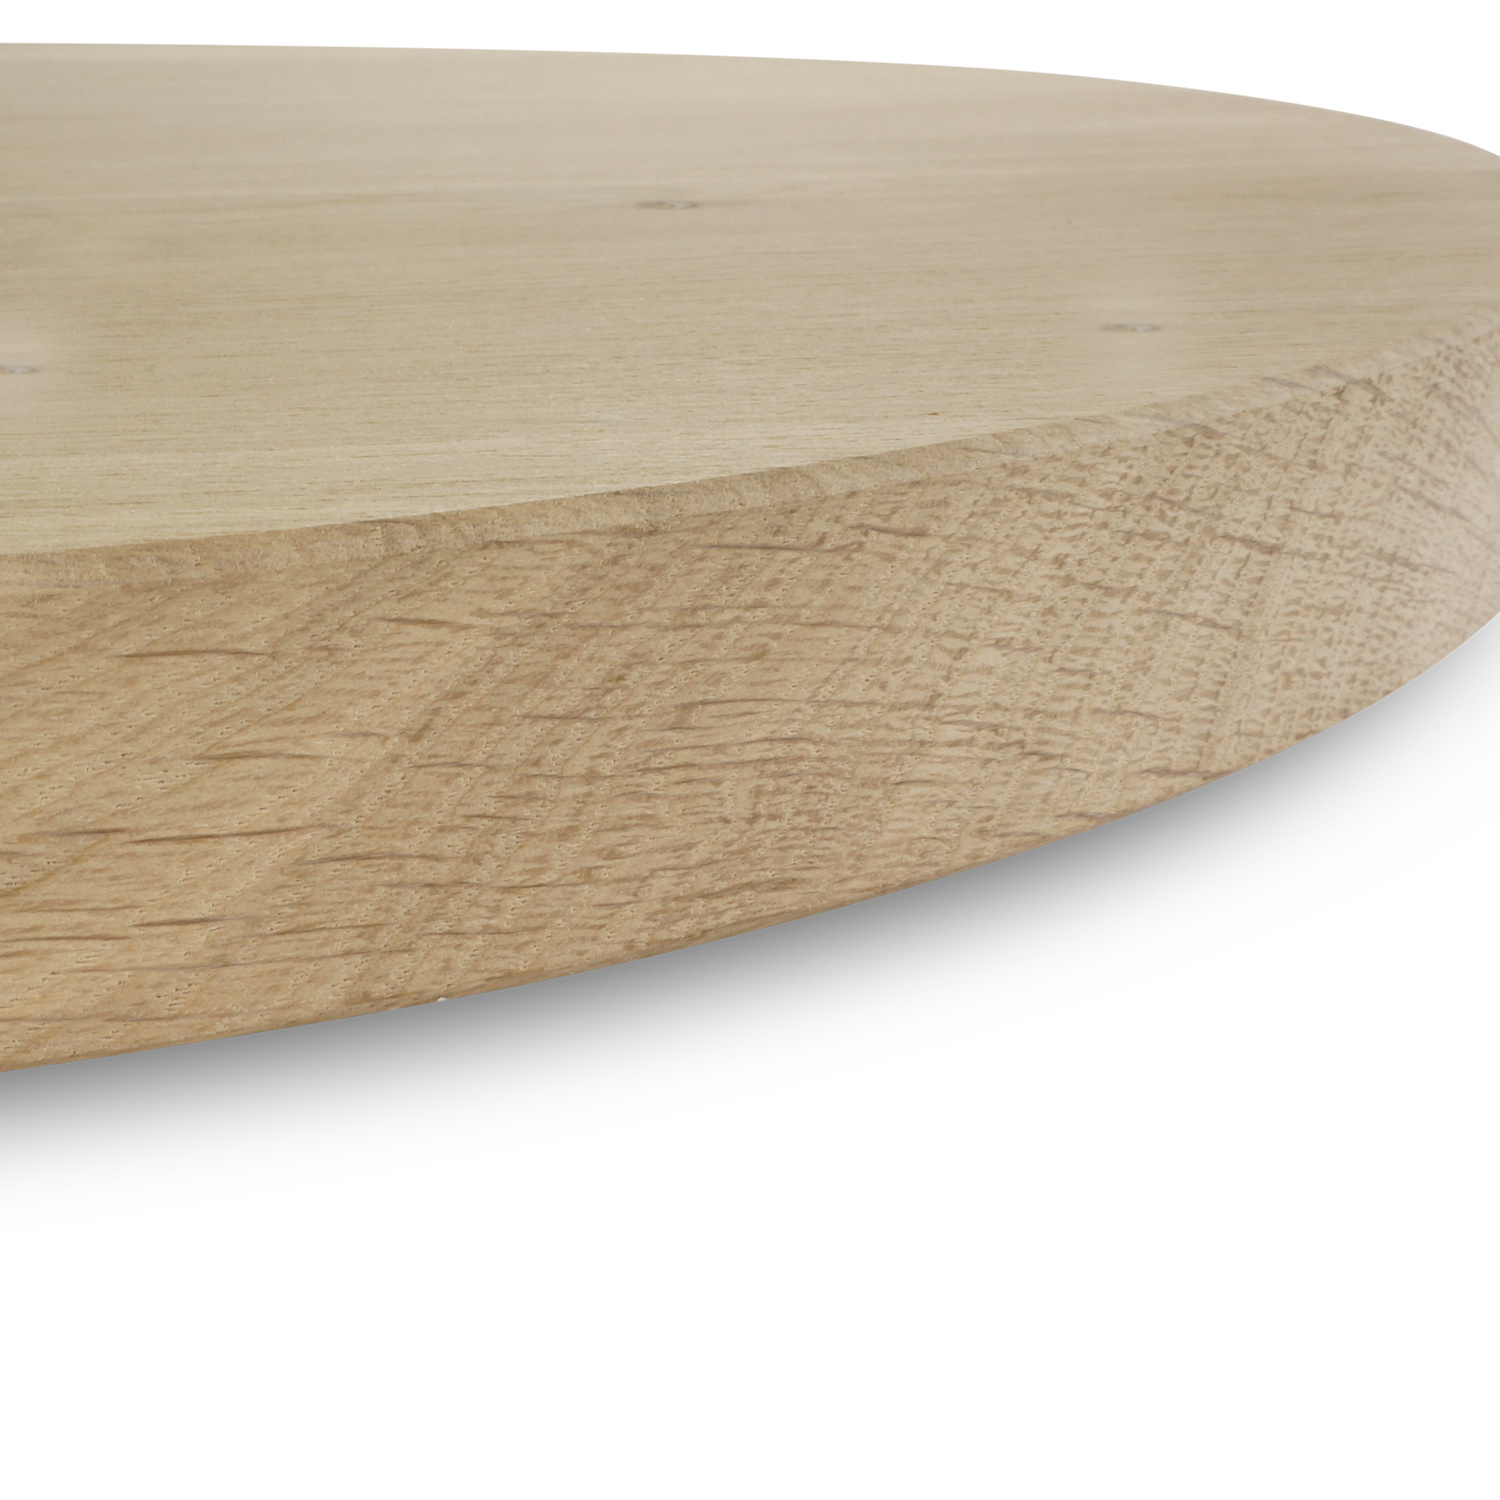  Ovaal eiken tafelblad - 2,7 cm dik (1-laag) - Diverse afmetingen - foutvrij Europees eikenhout - met brede lamellen (circa 10-12 cm) - verlijmd kd 8-12%